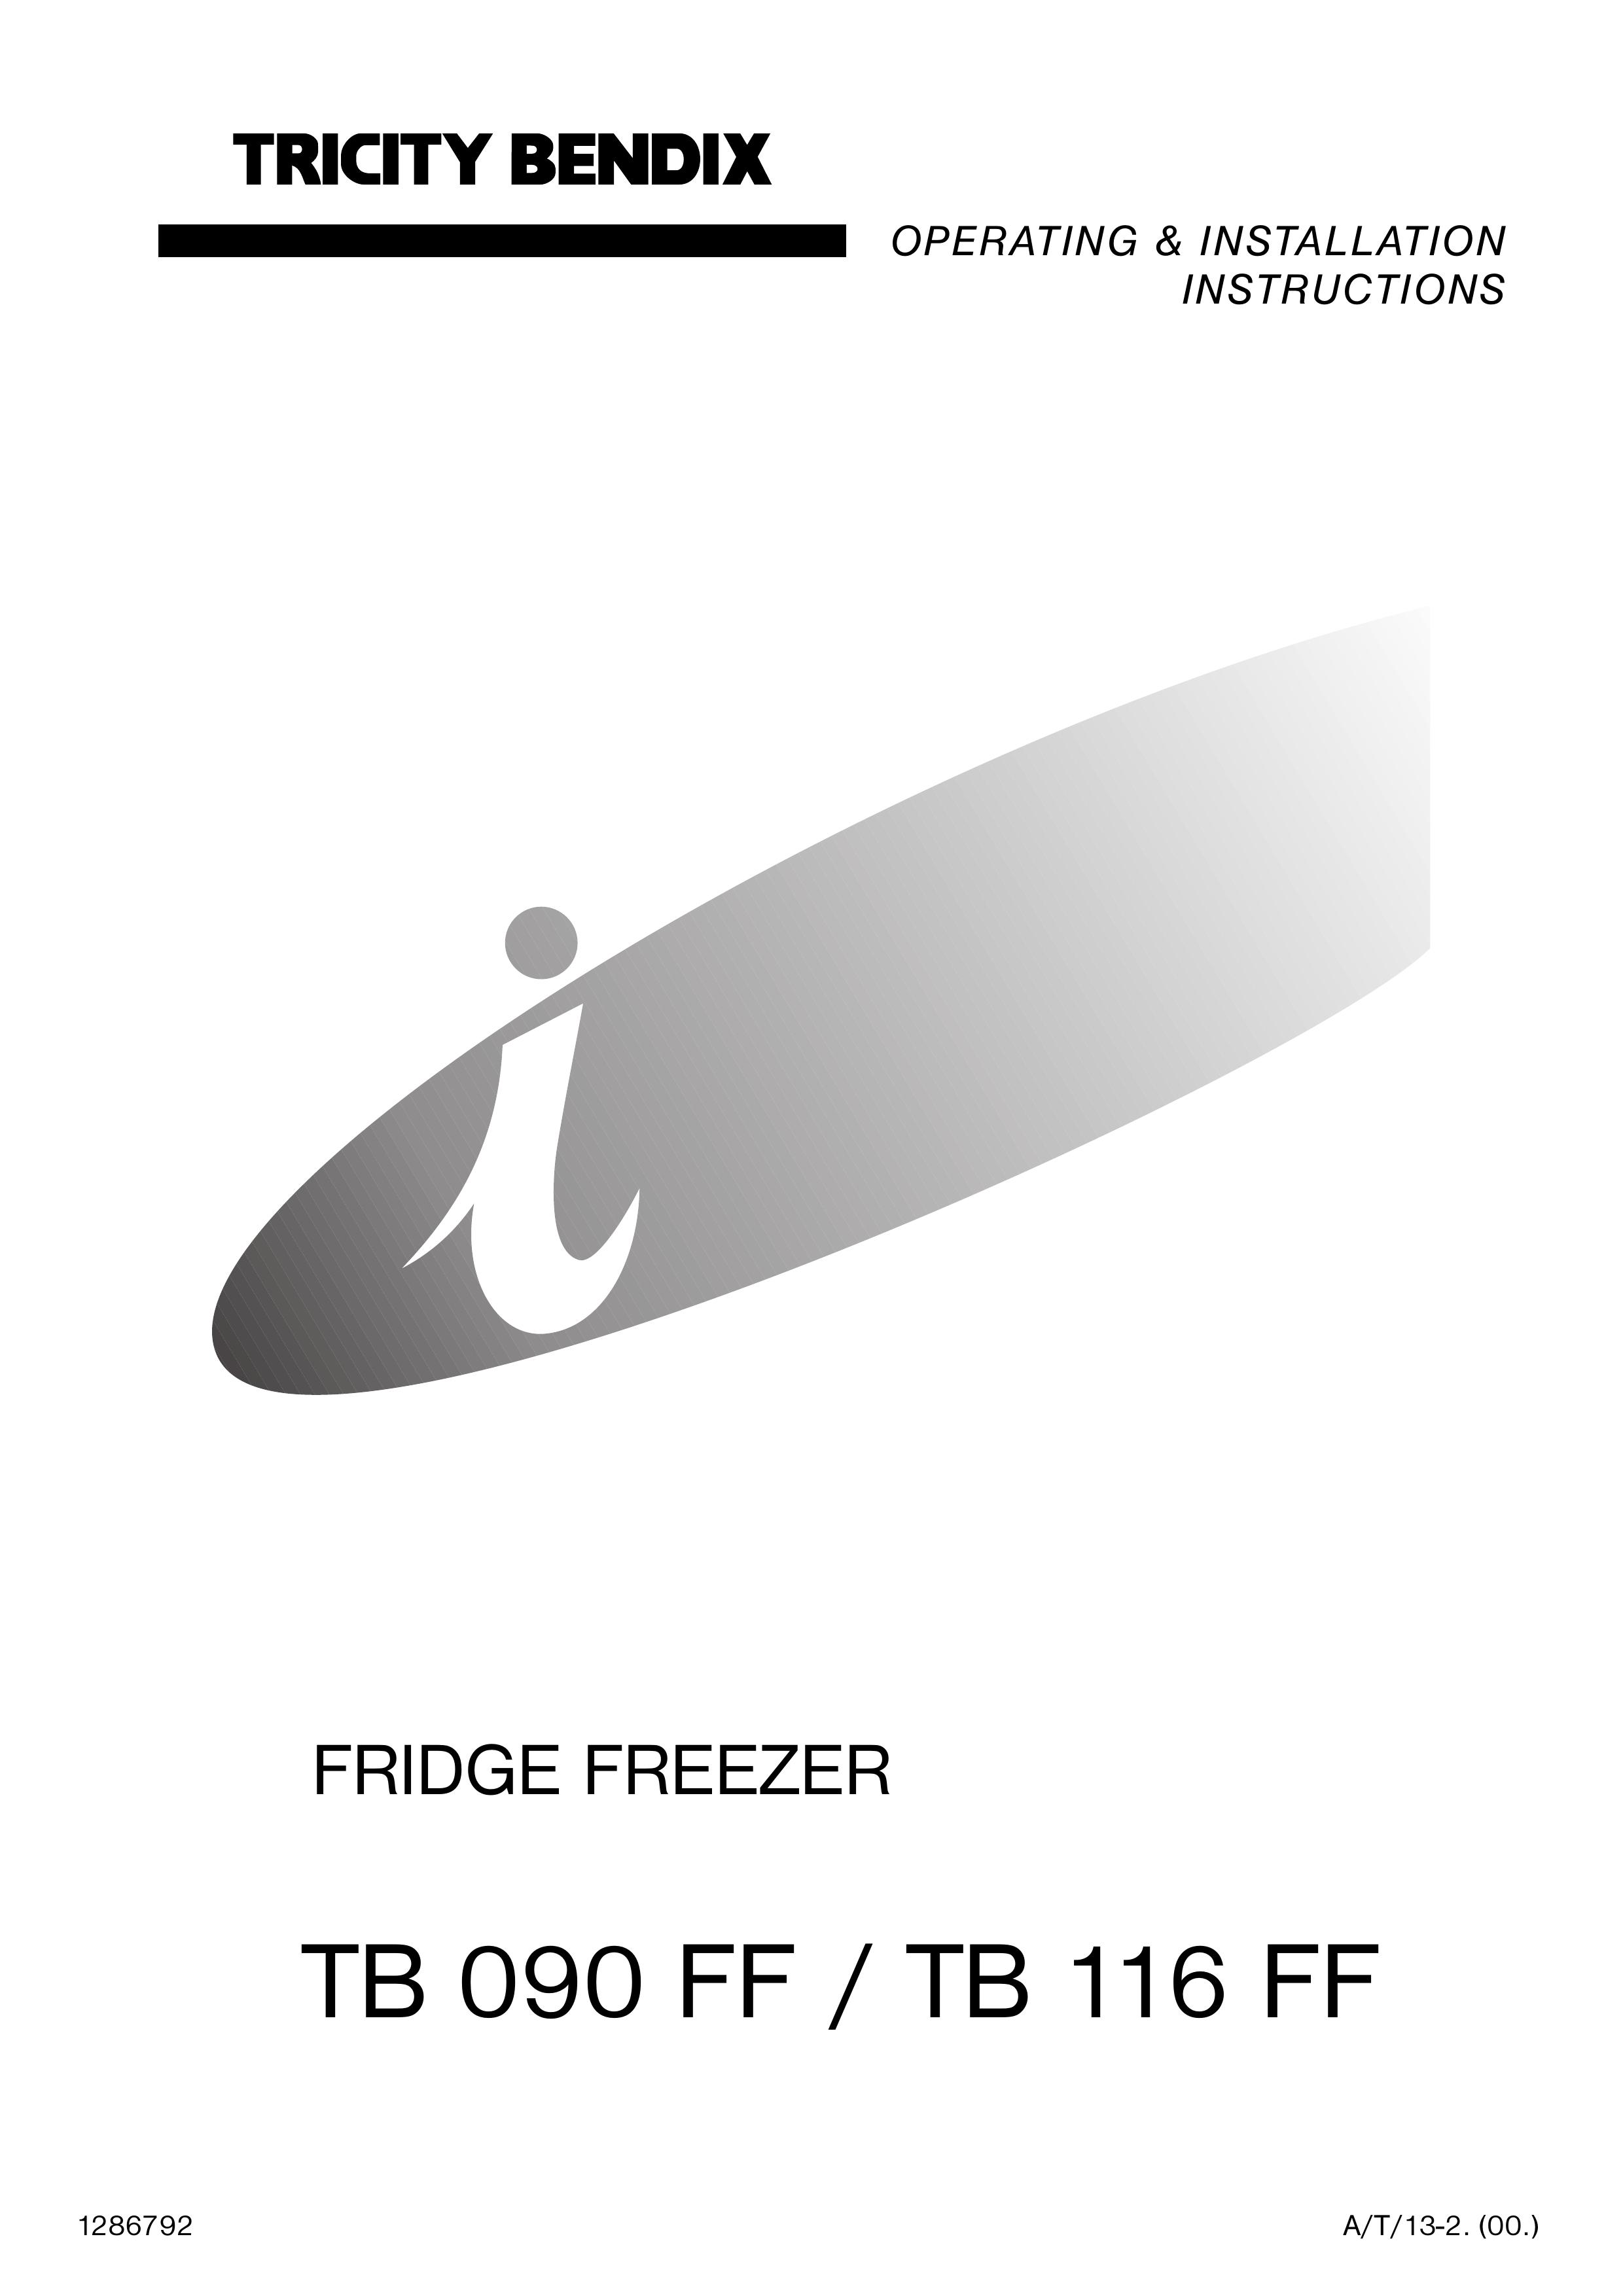 Tricity Bendix TB 090 FF Refrigerator User Manual